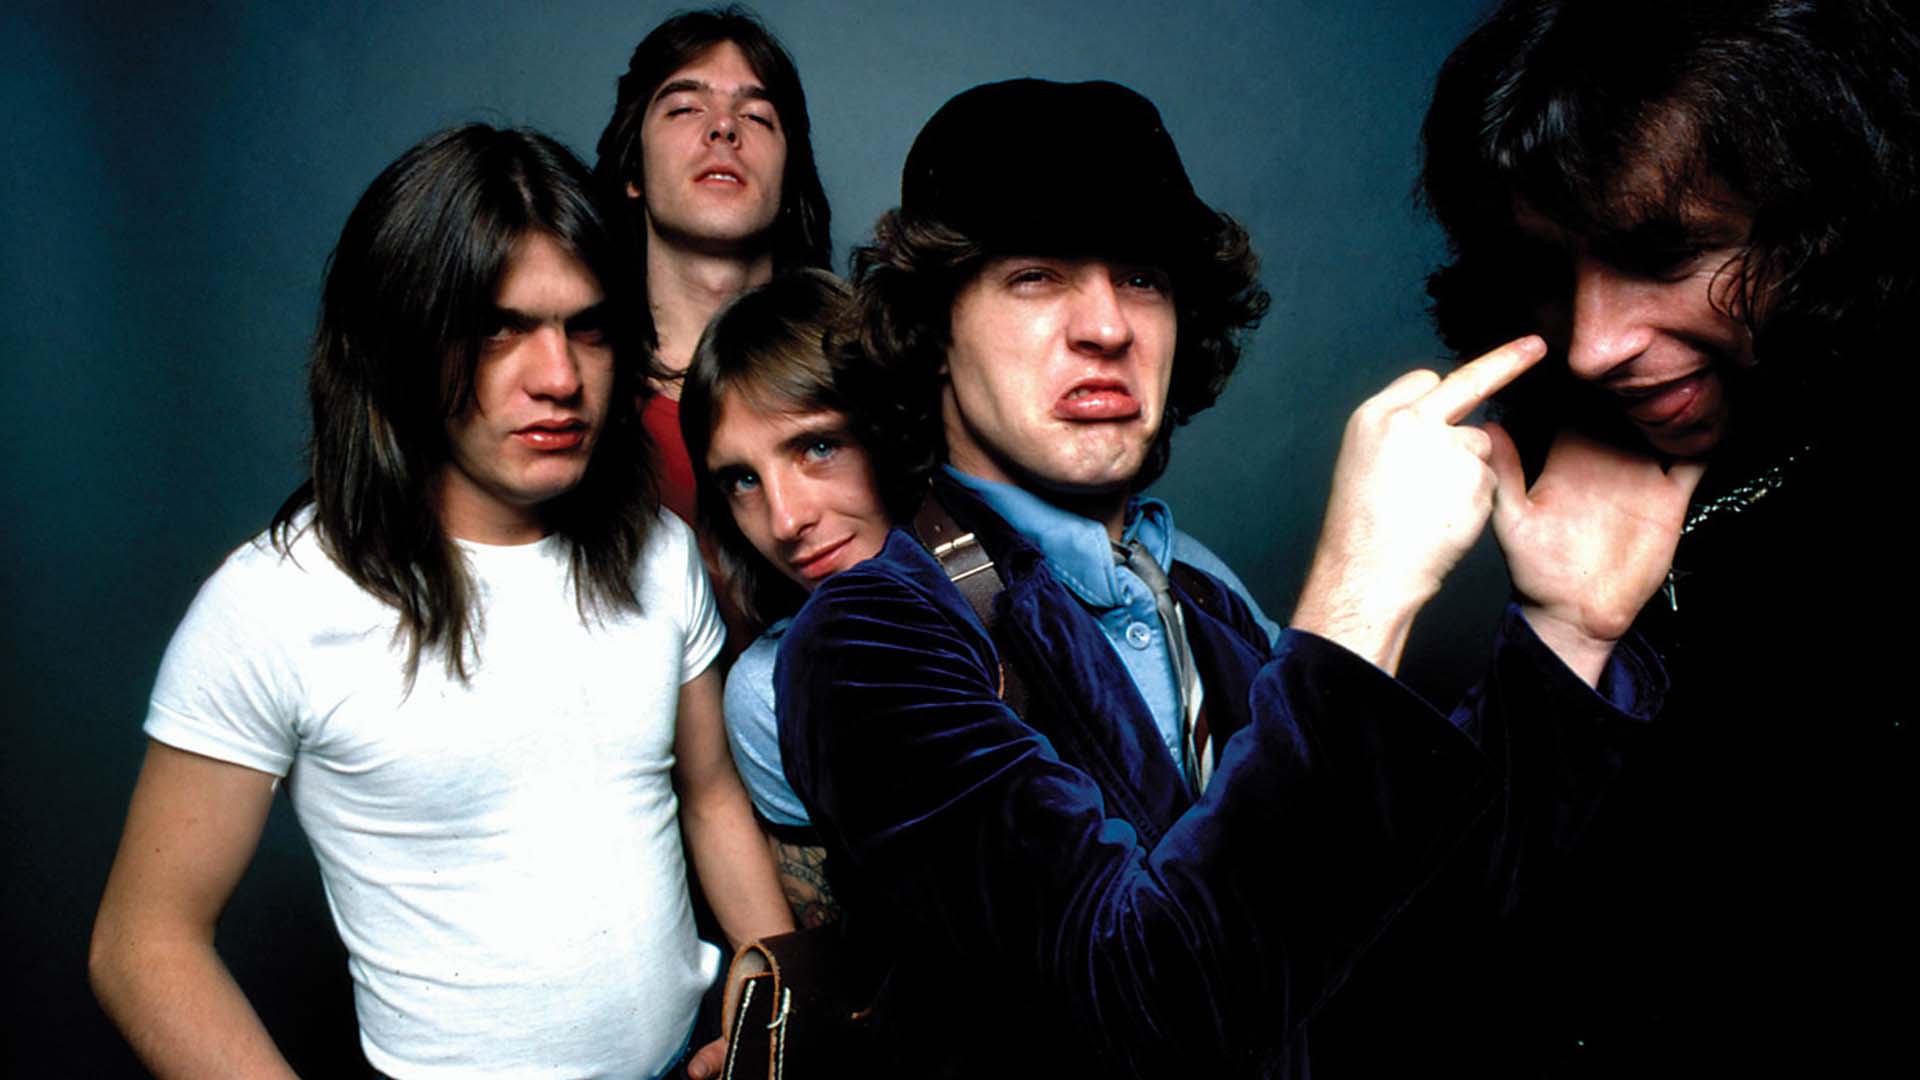 Ac dc группа песни слушать. AC/DC группа. Рок группа Эйси ДИСИ. AC DC 1979. AC DC 70s.